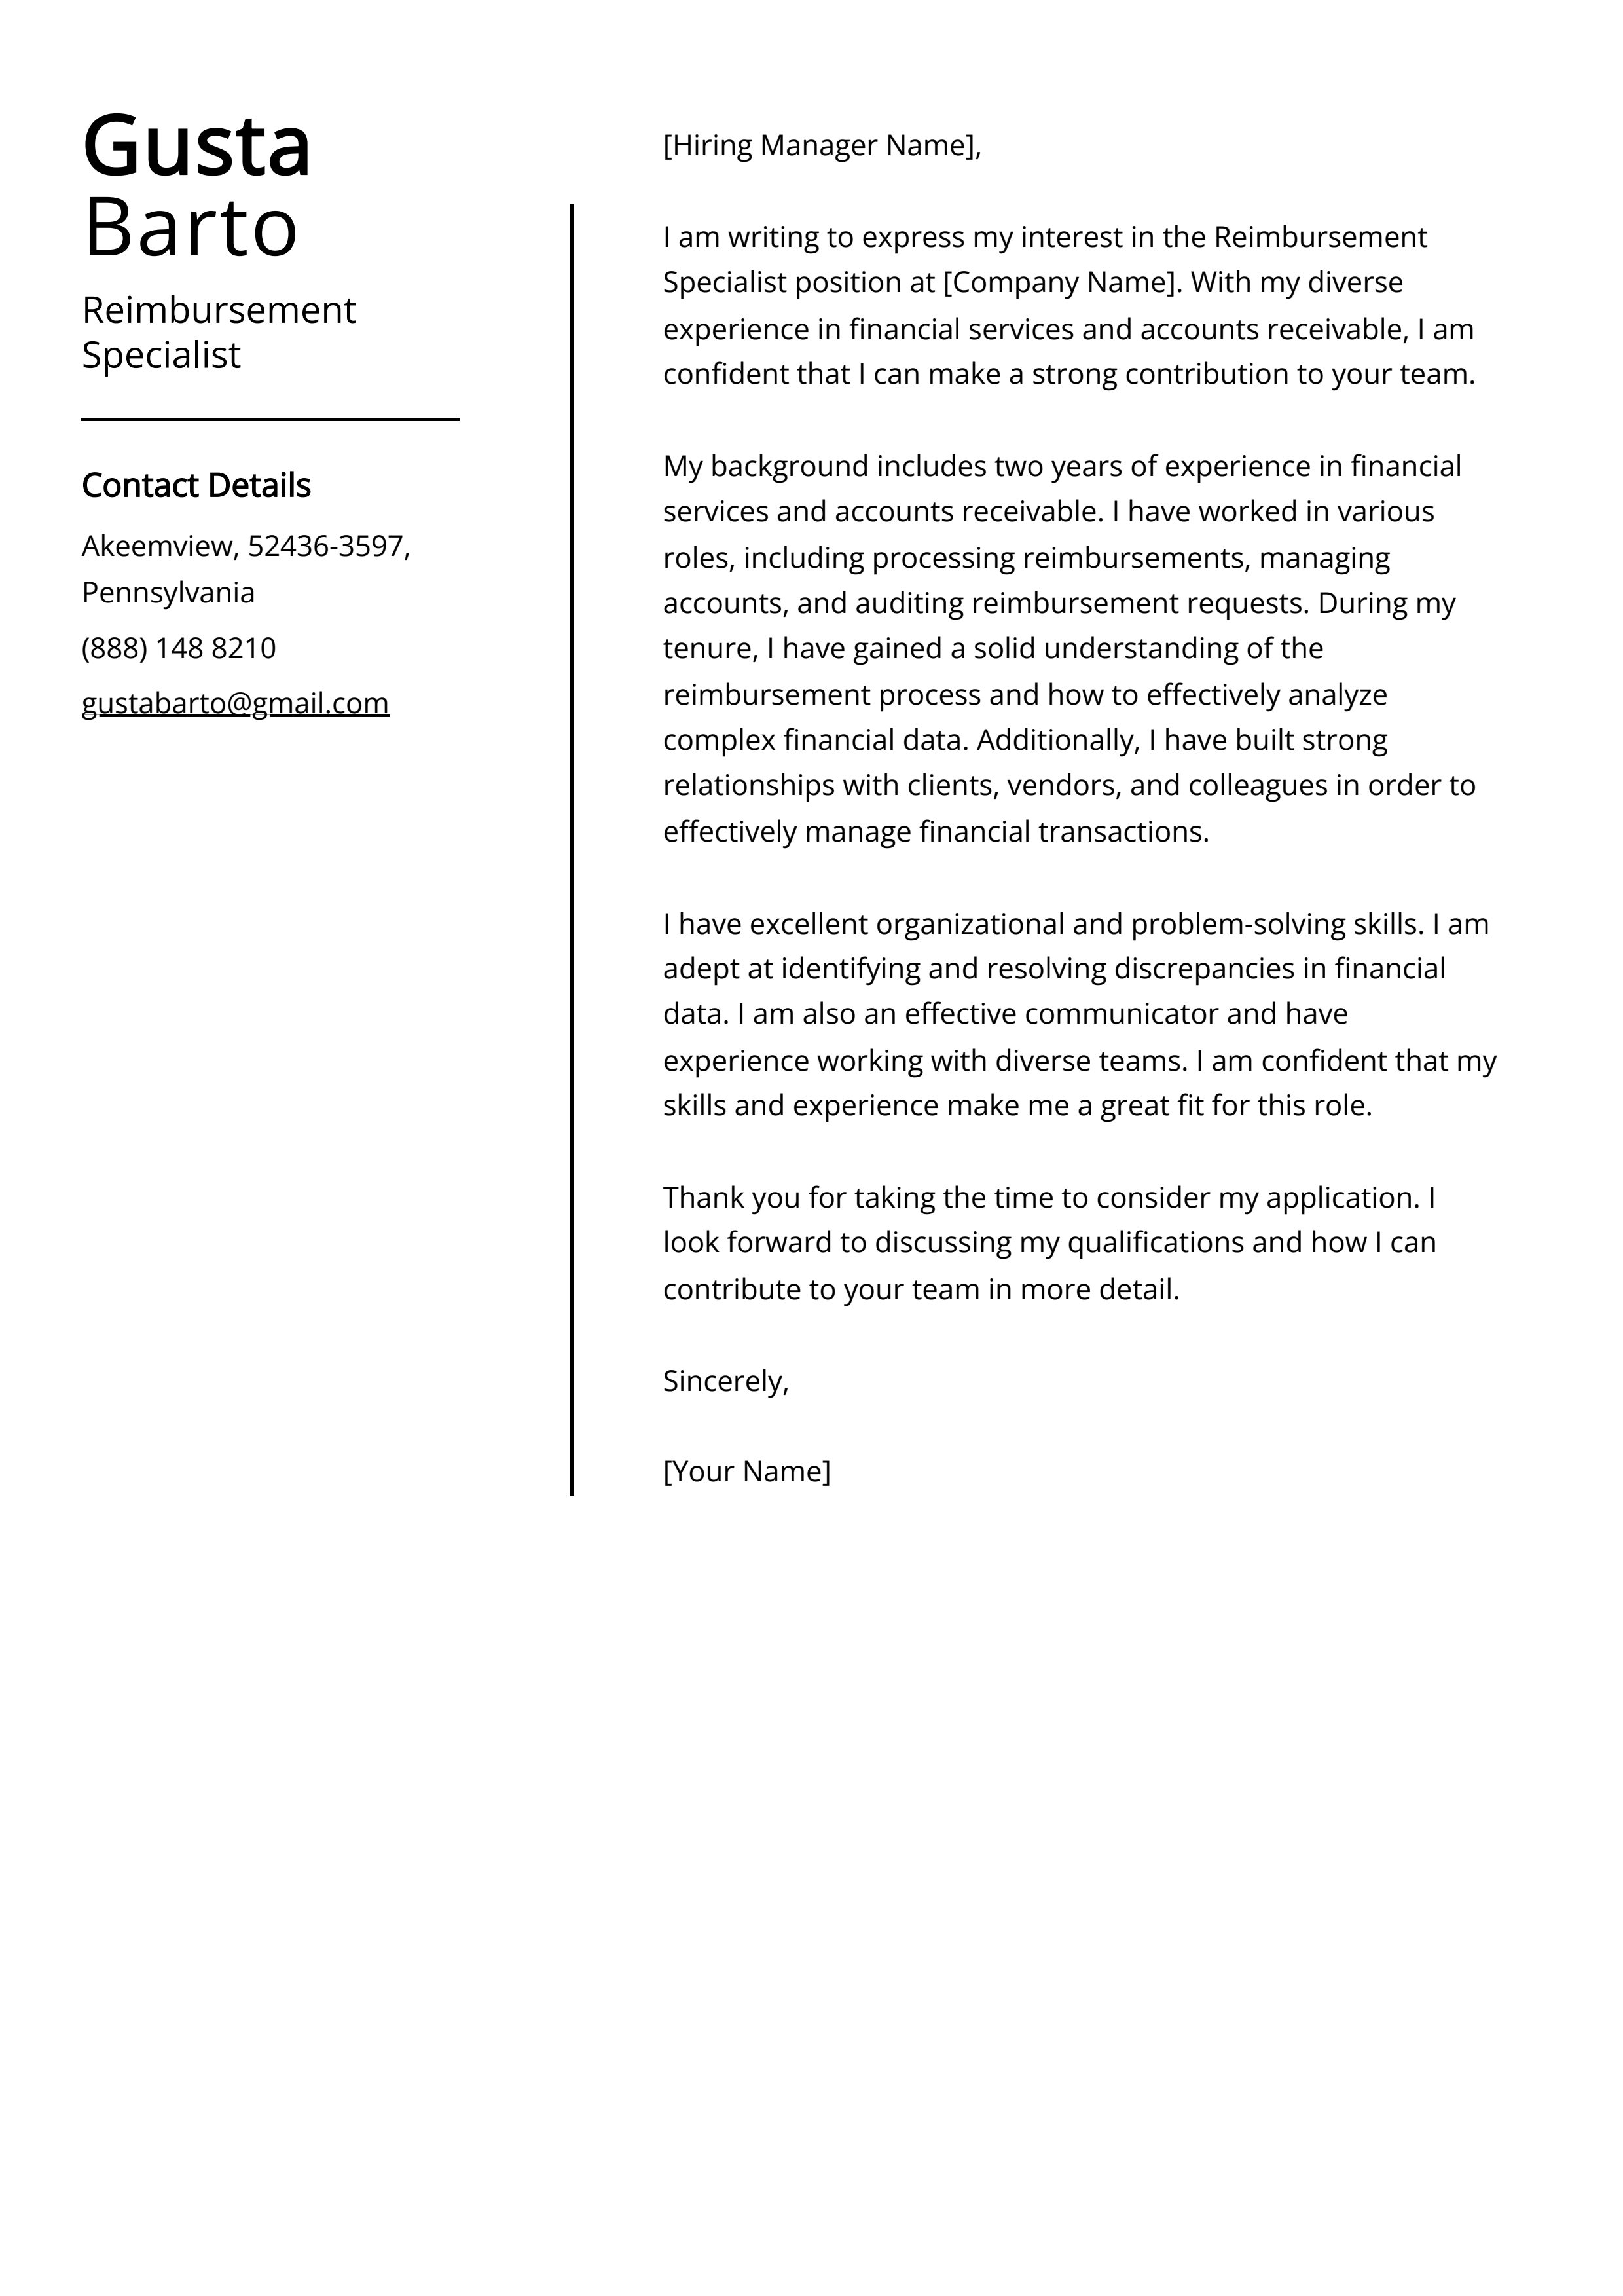 Reimbursement Specialist Cover Letter Example